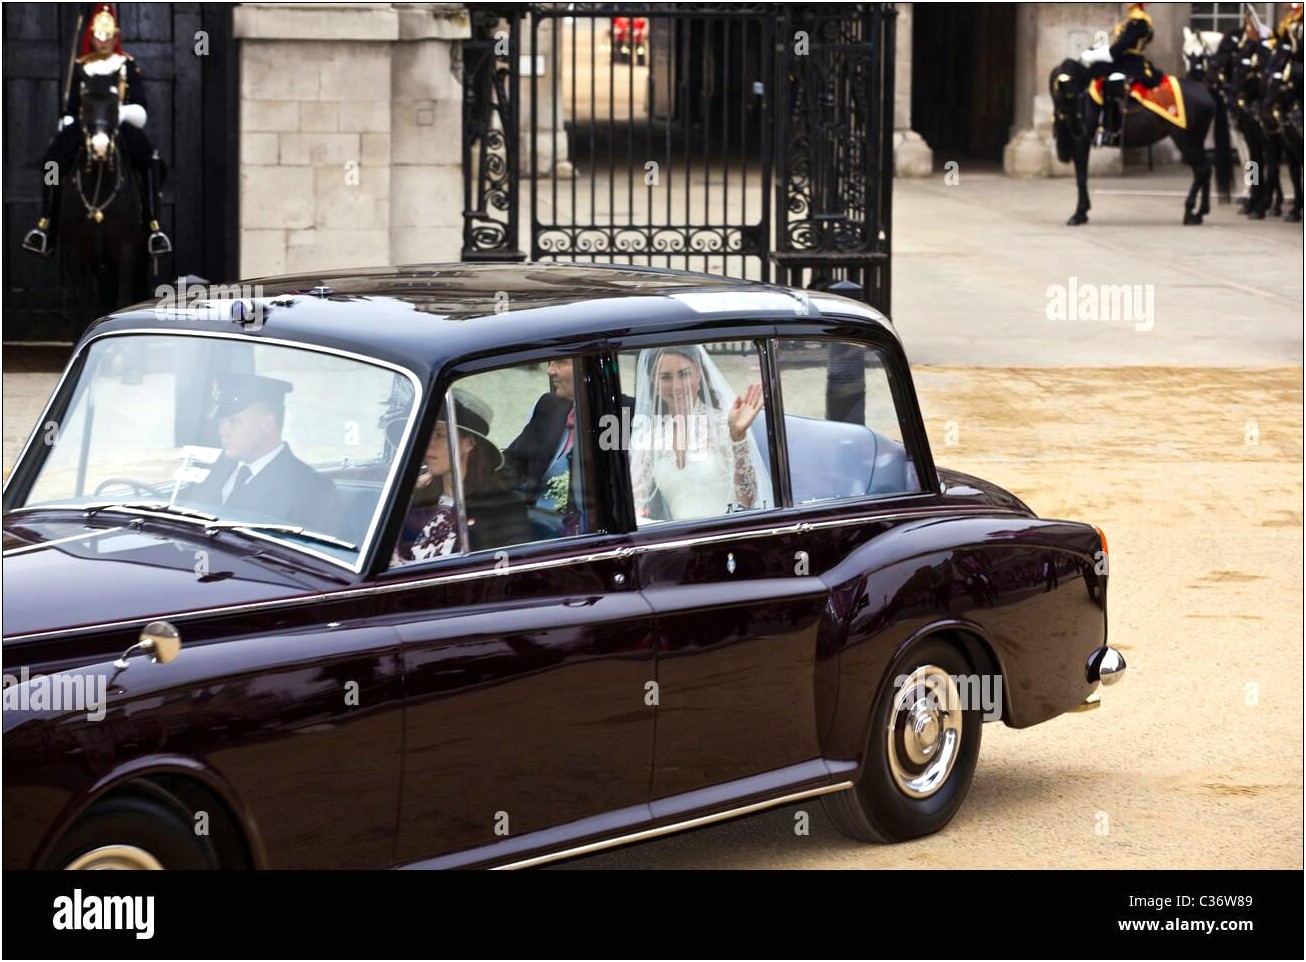 Jack Whitehall Invited To Royal Wedding